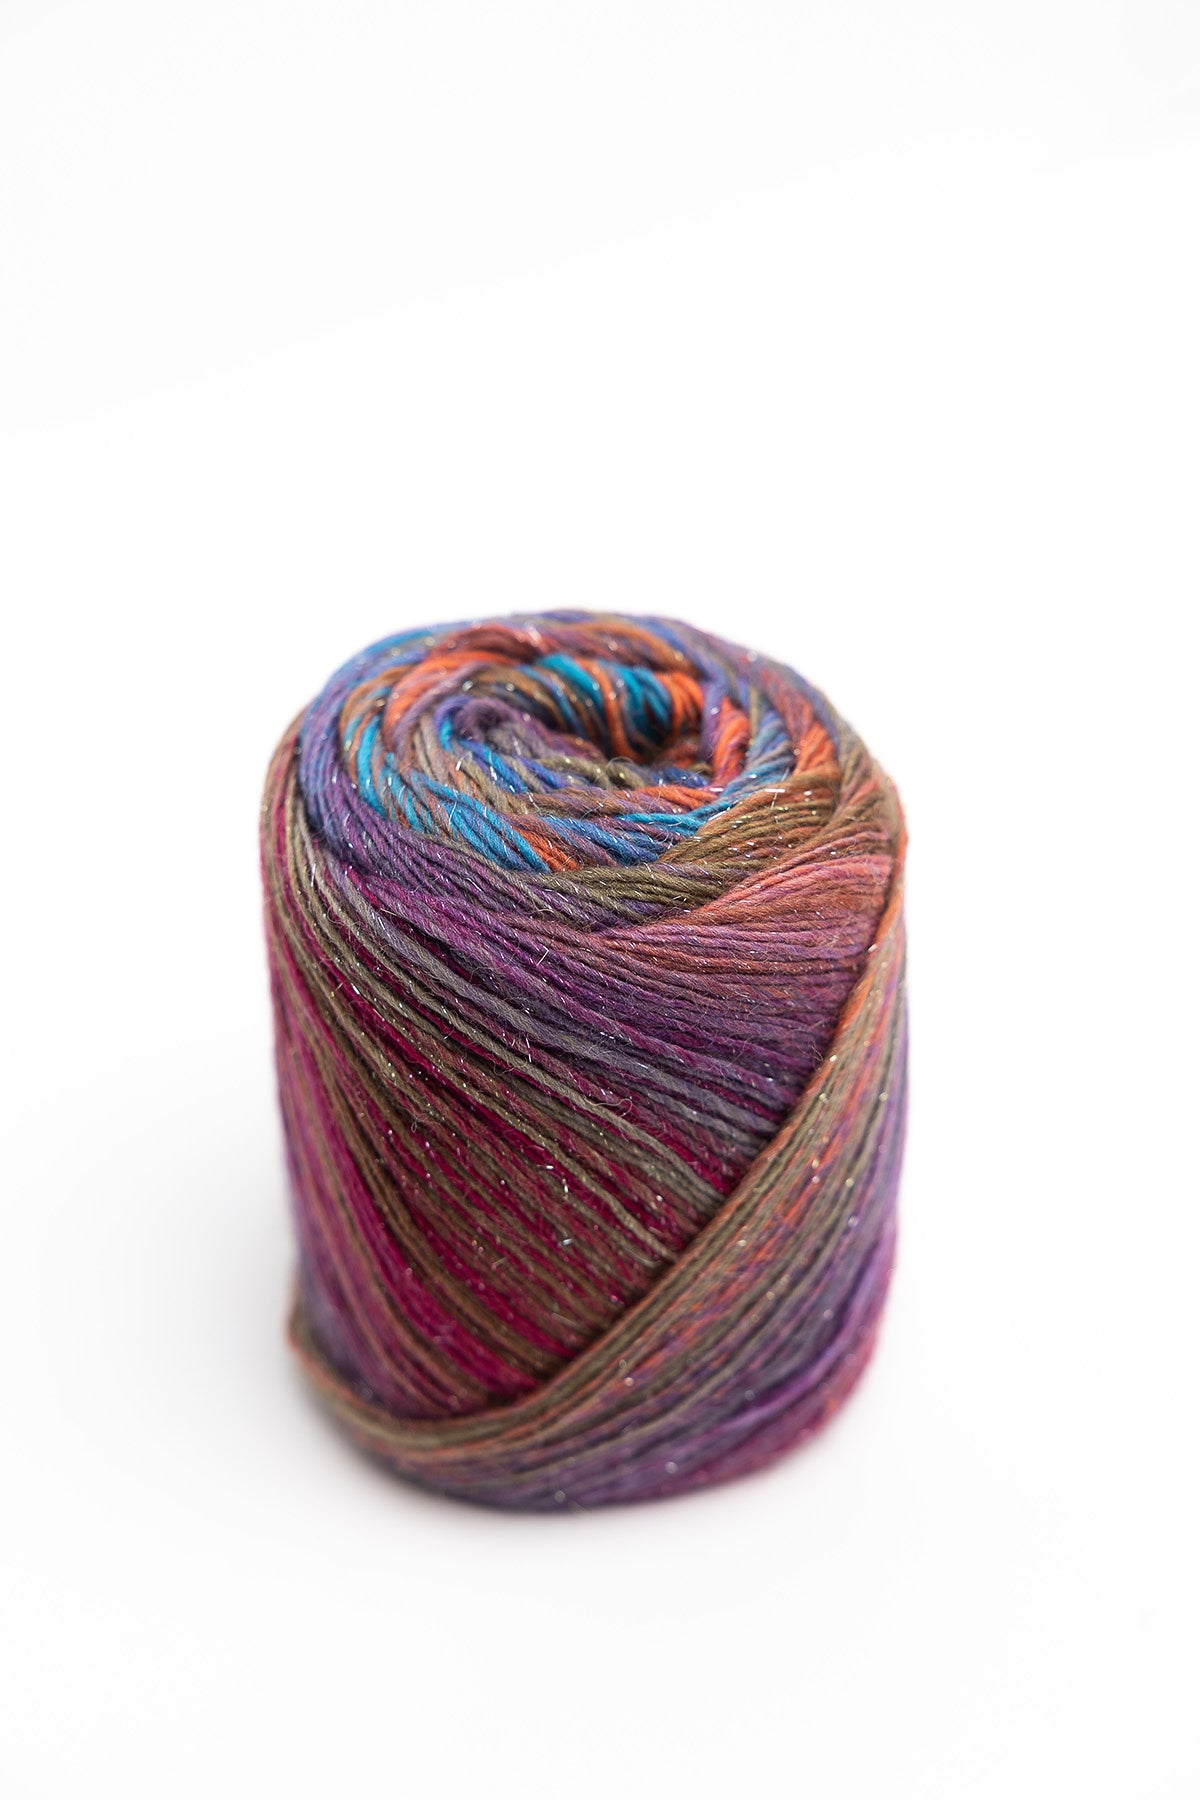 LANGYARNS - Knitting and Crochet Patterns for Socks